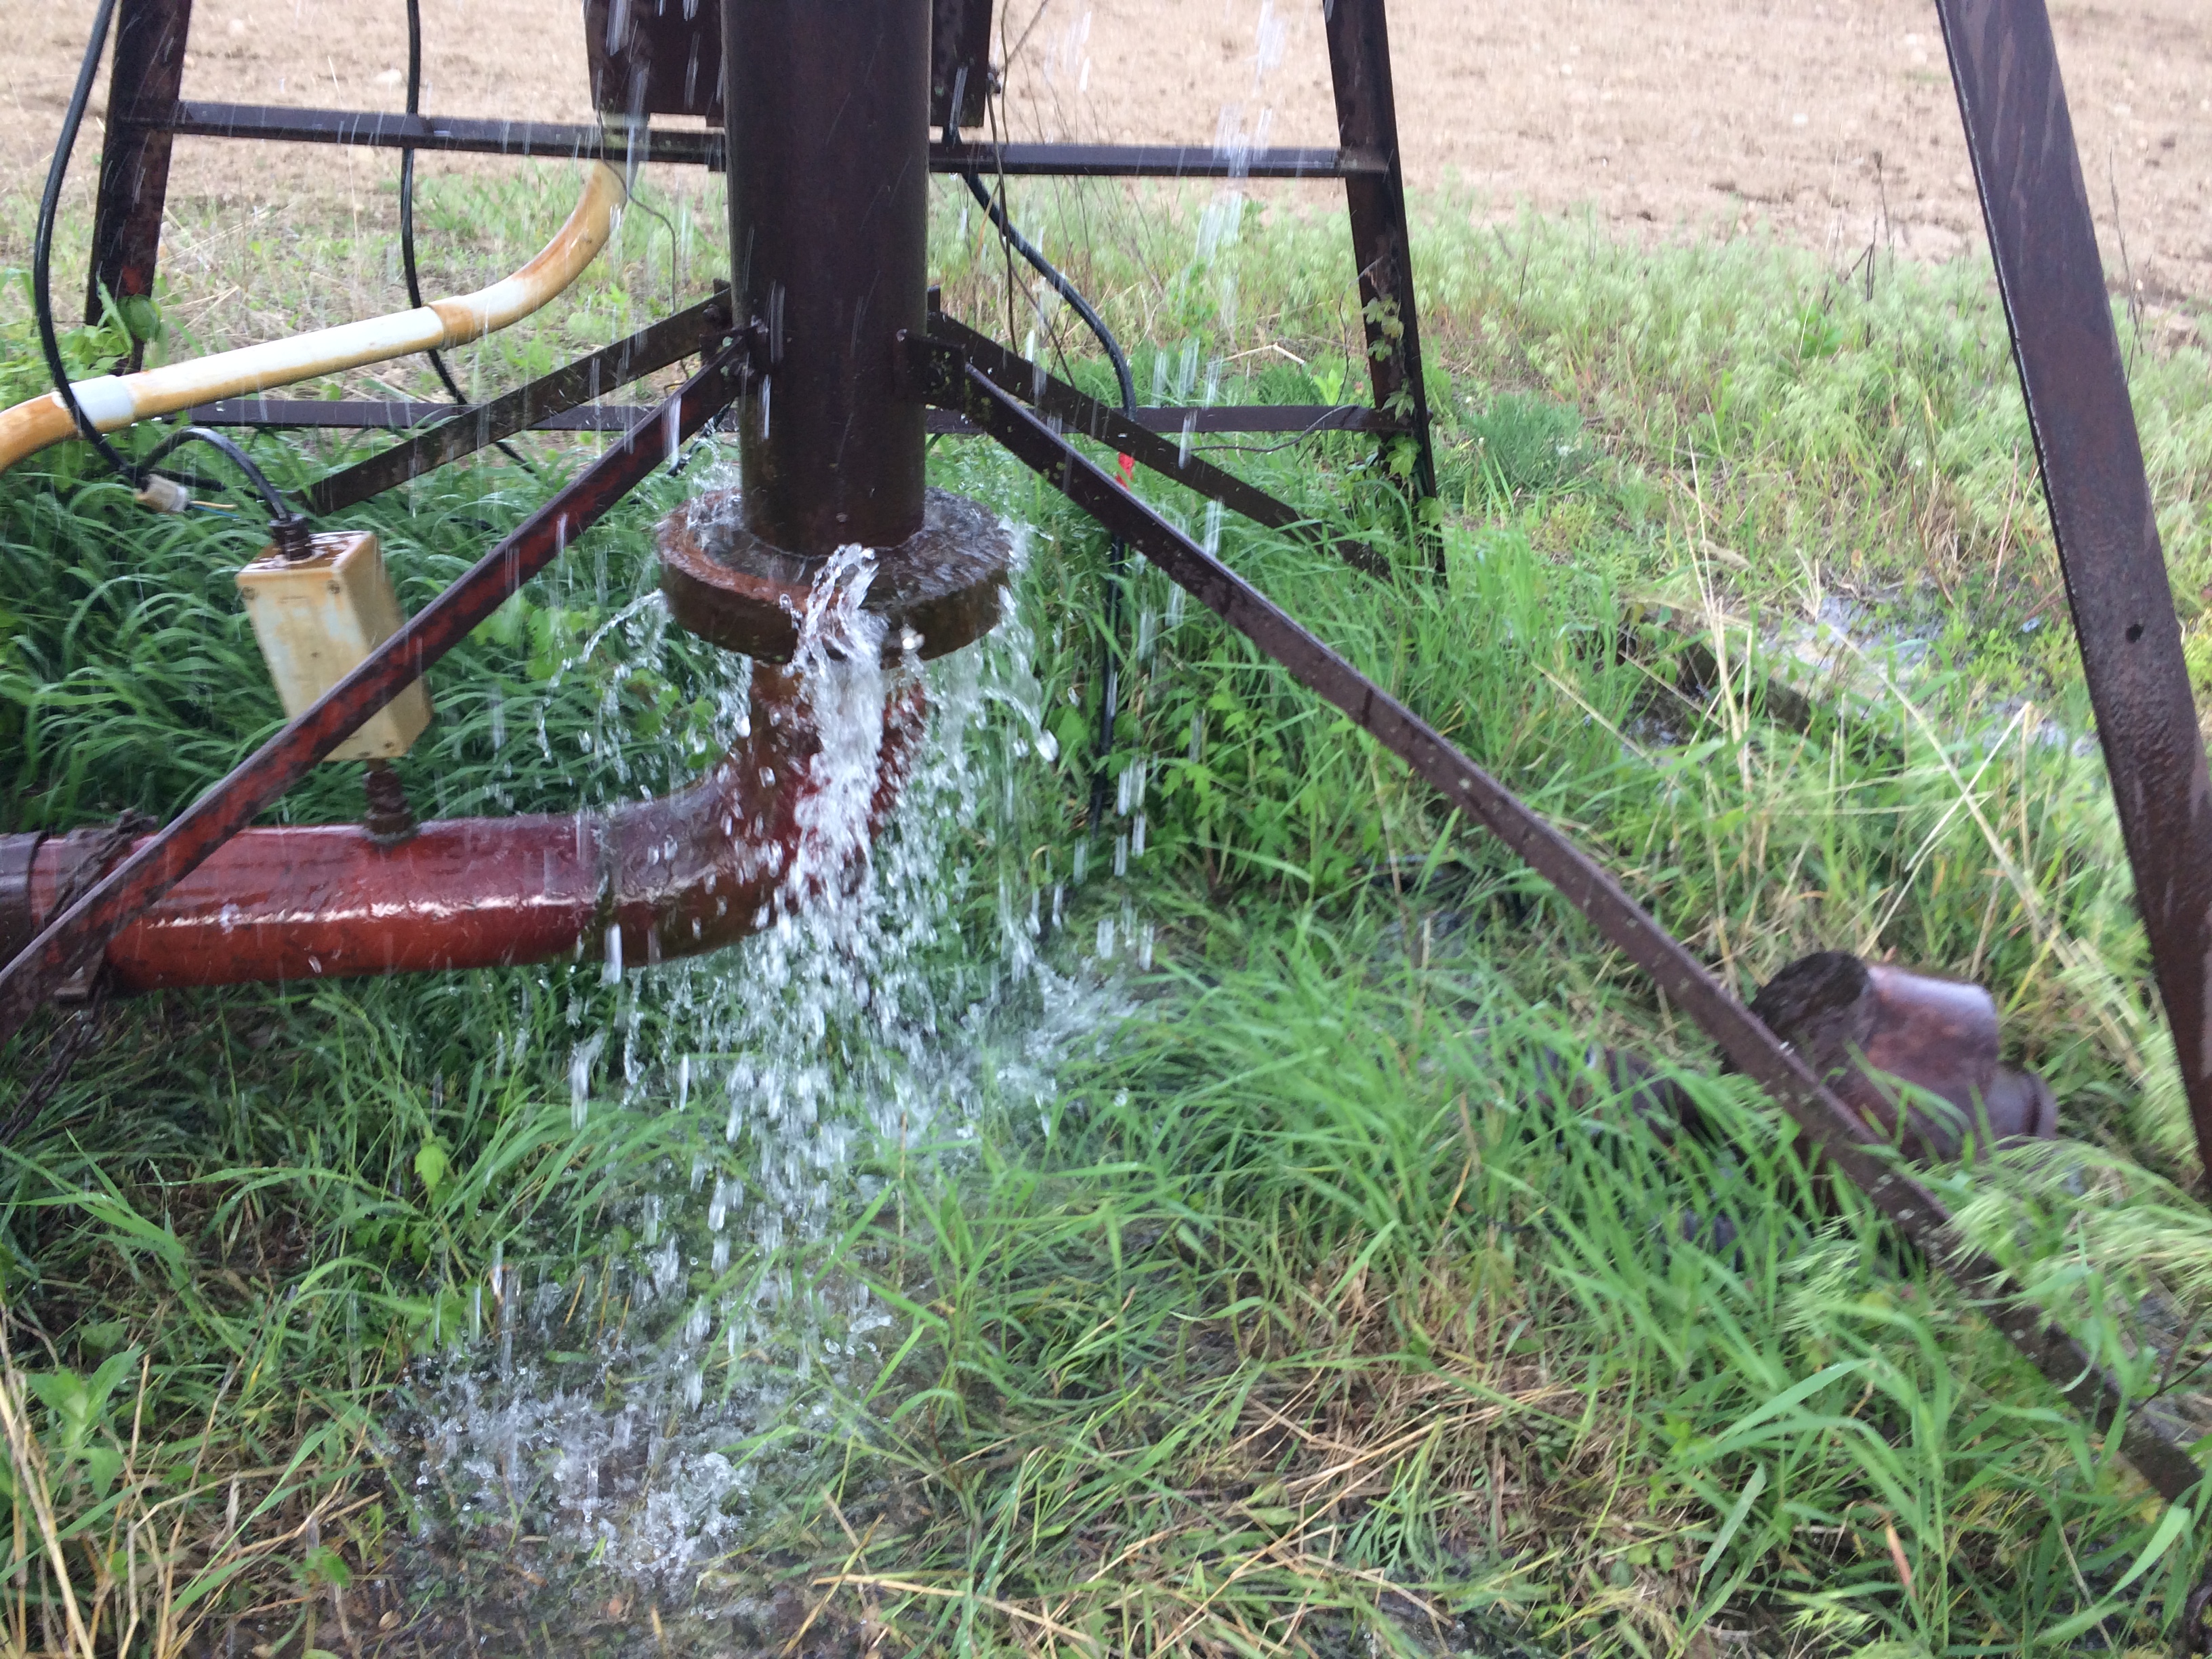 Irrigator with a leak